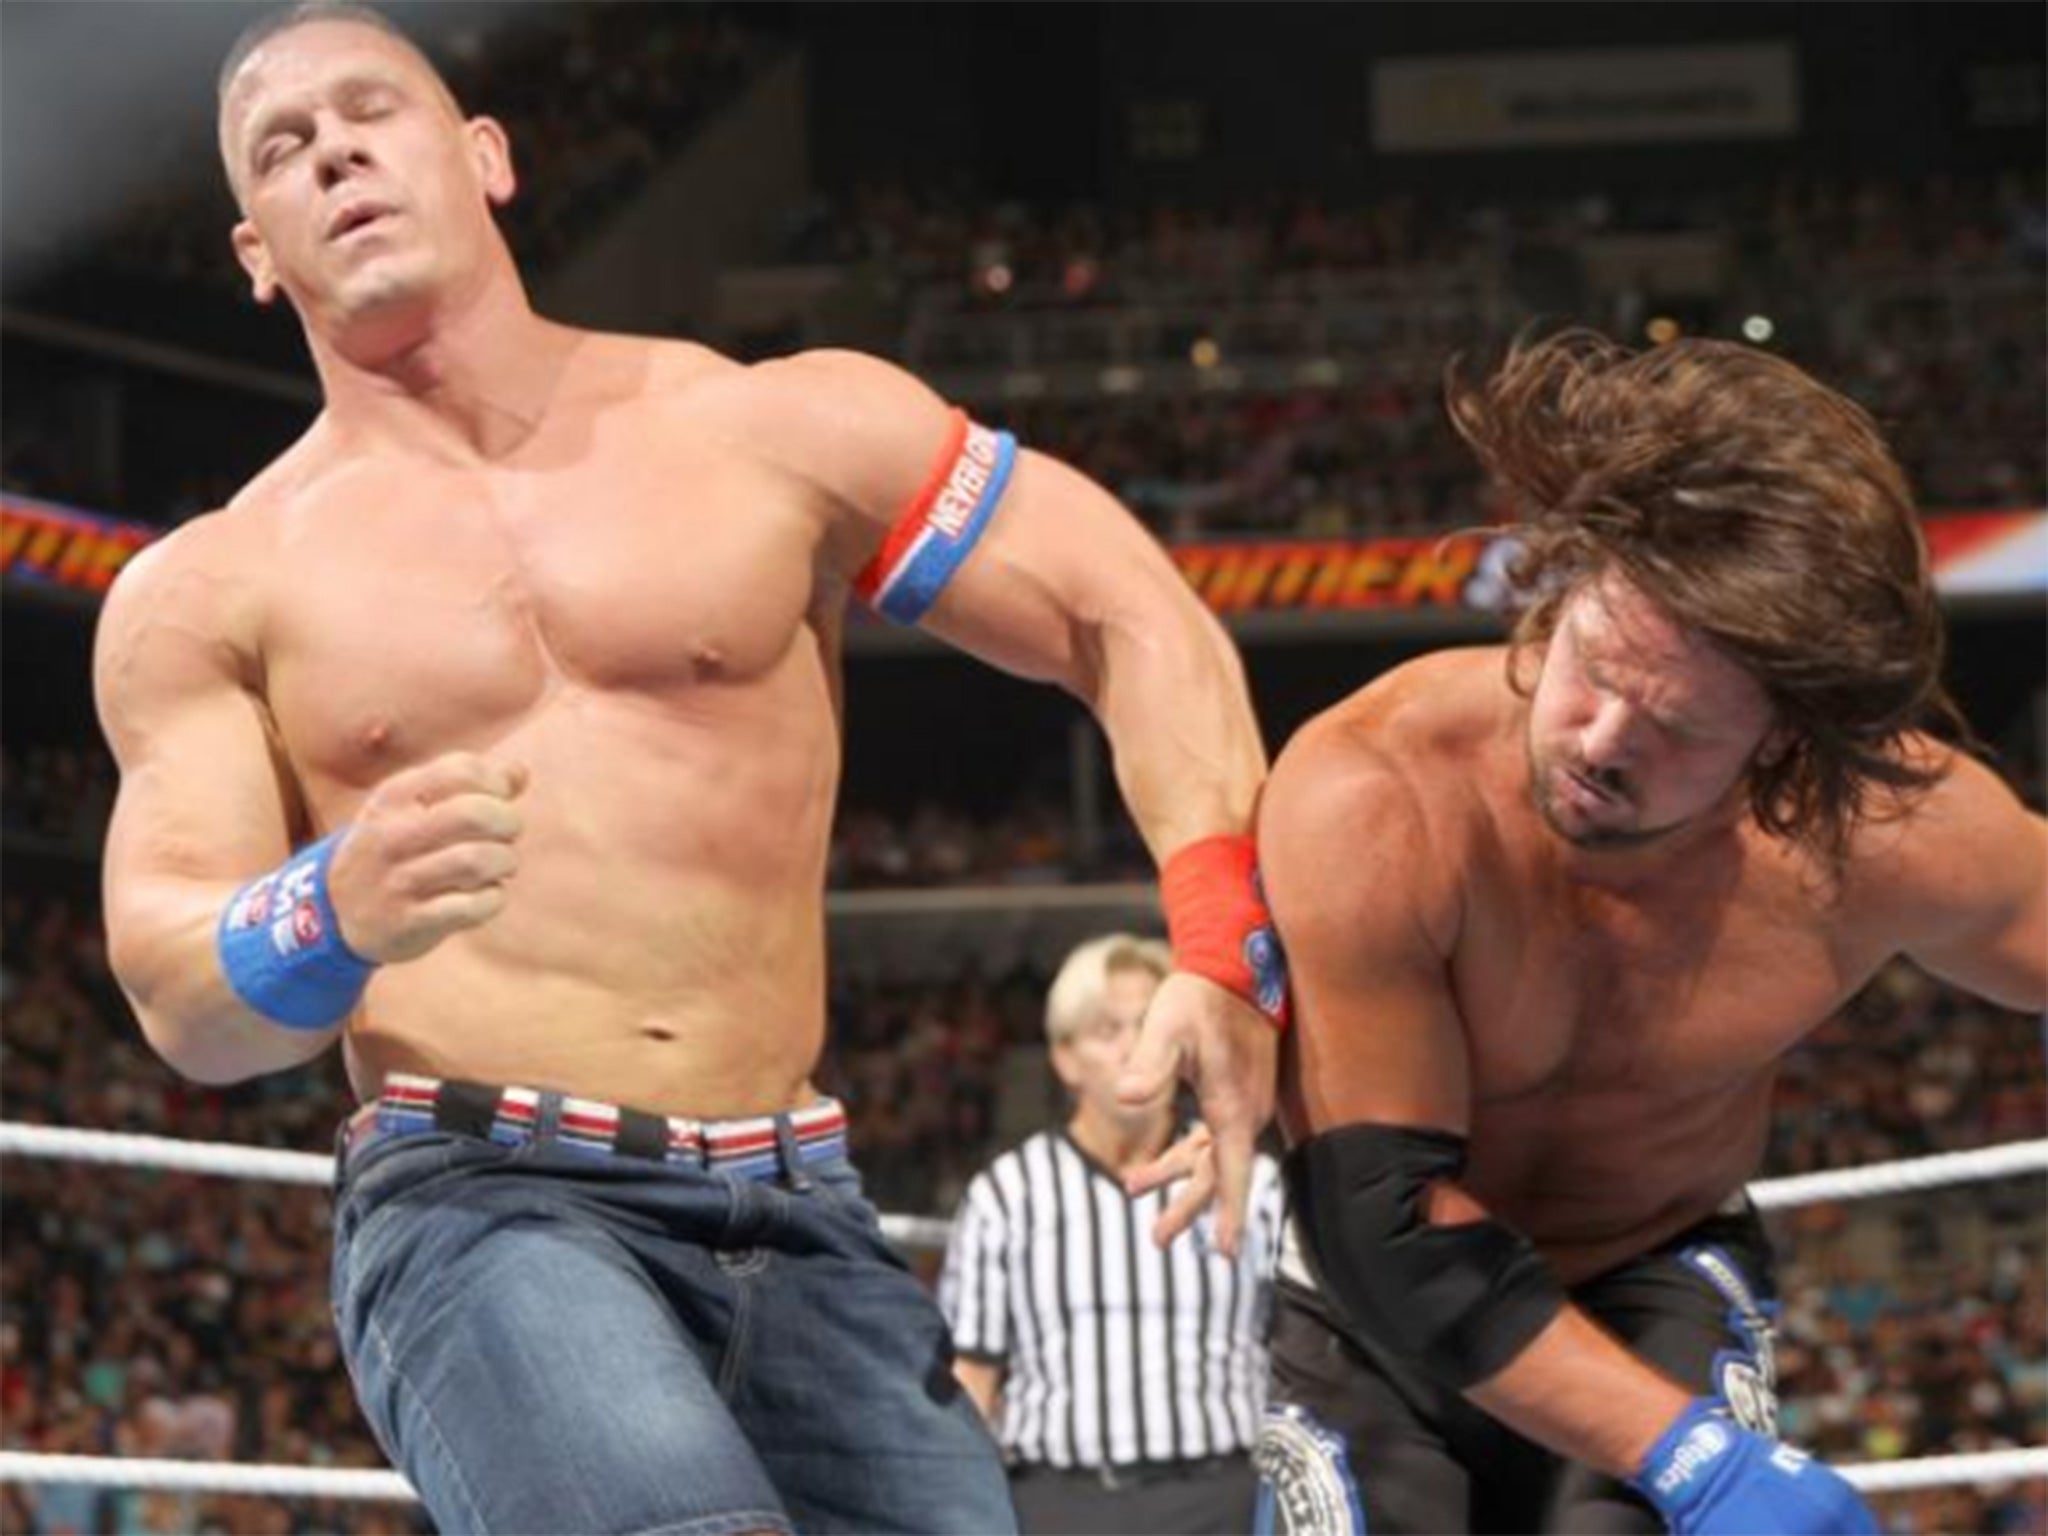 Wwe Summerslam Aj Styles And John Cena Shine While Brock Lesnar